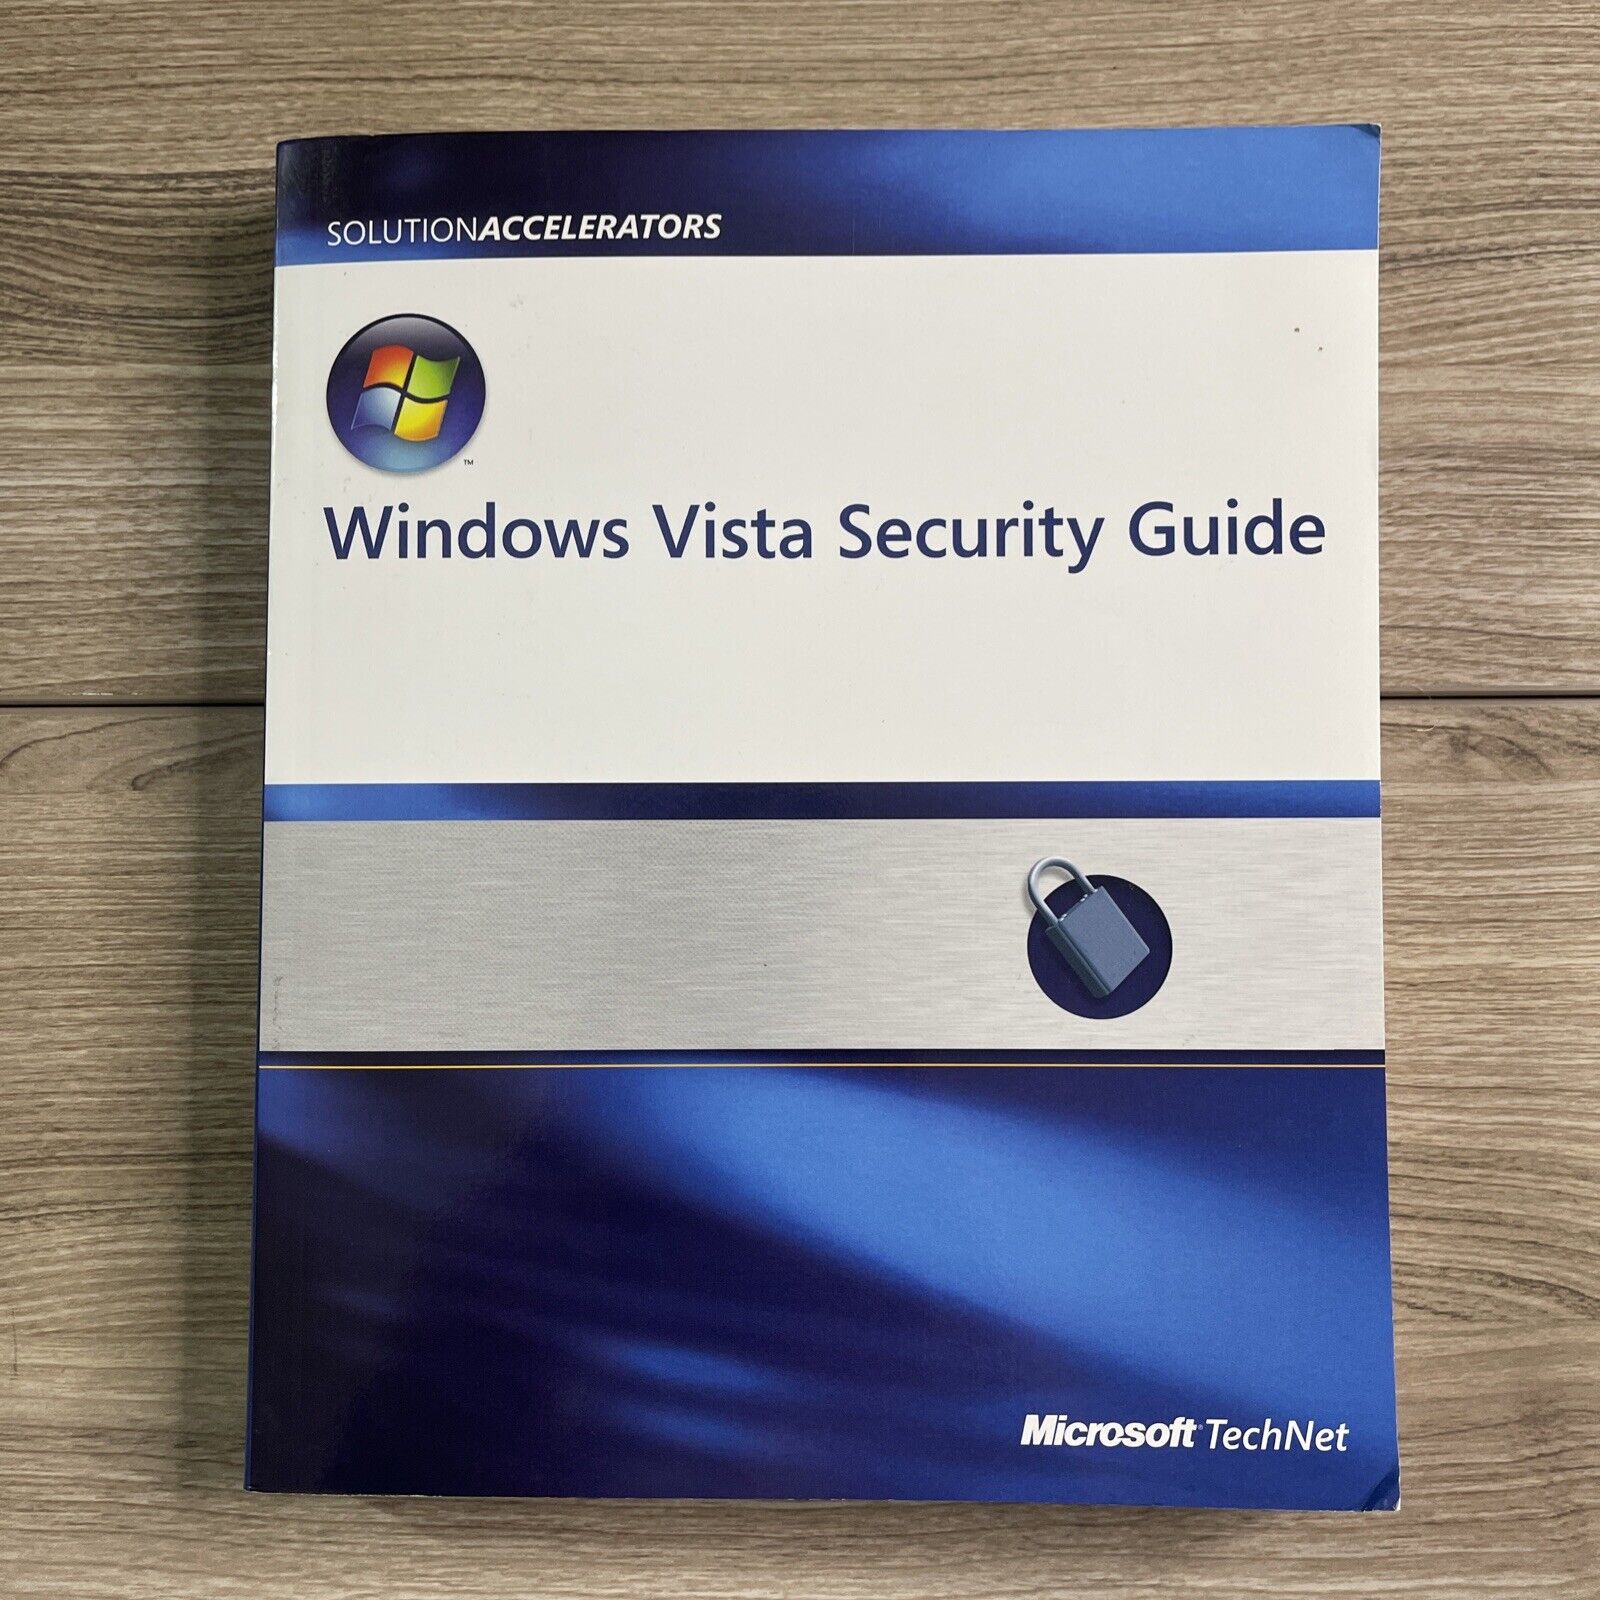 Microsoft Windows Vista Security Guide & CD. MS TechNet Solutions Accelerators